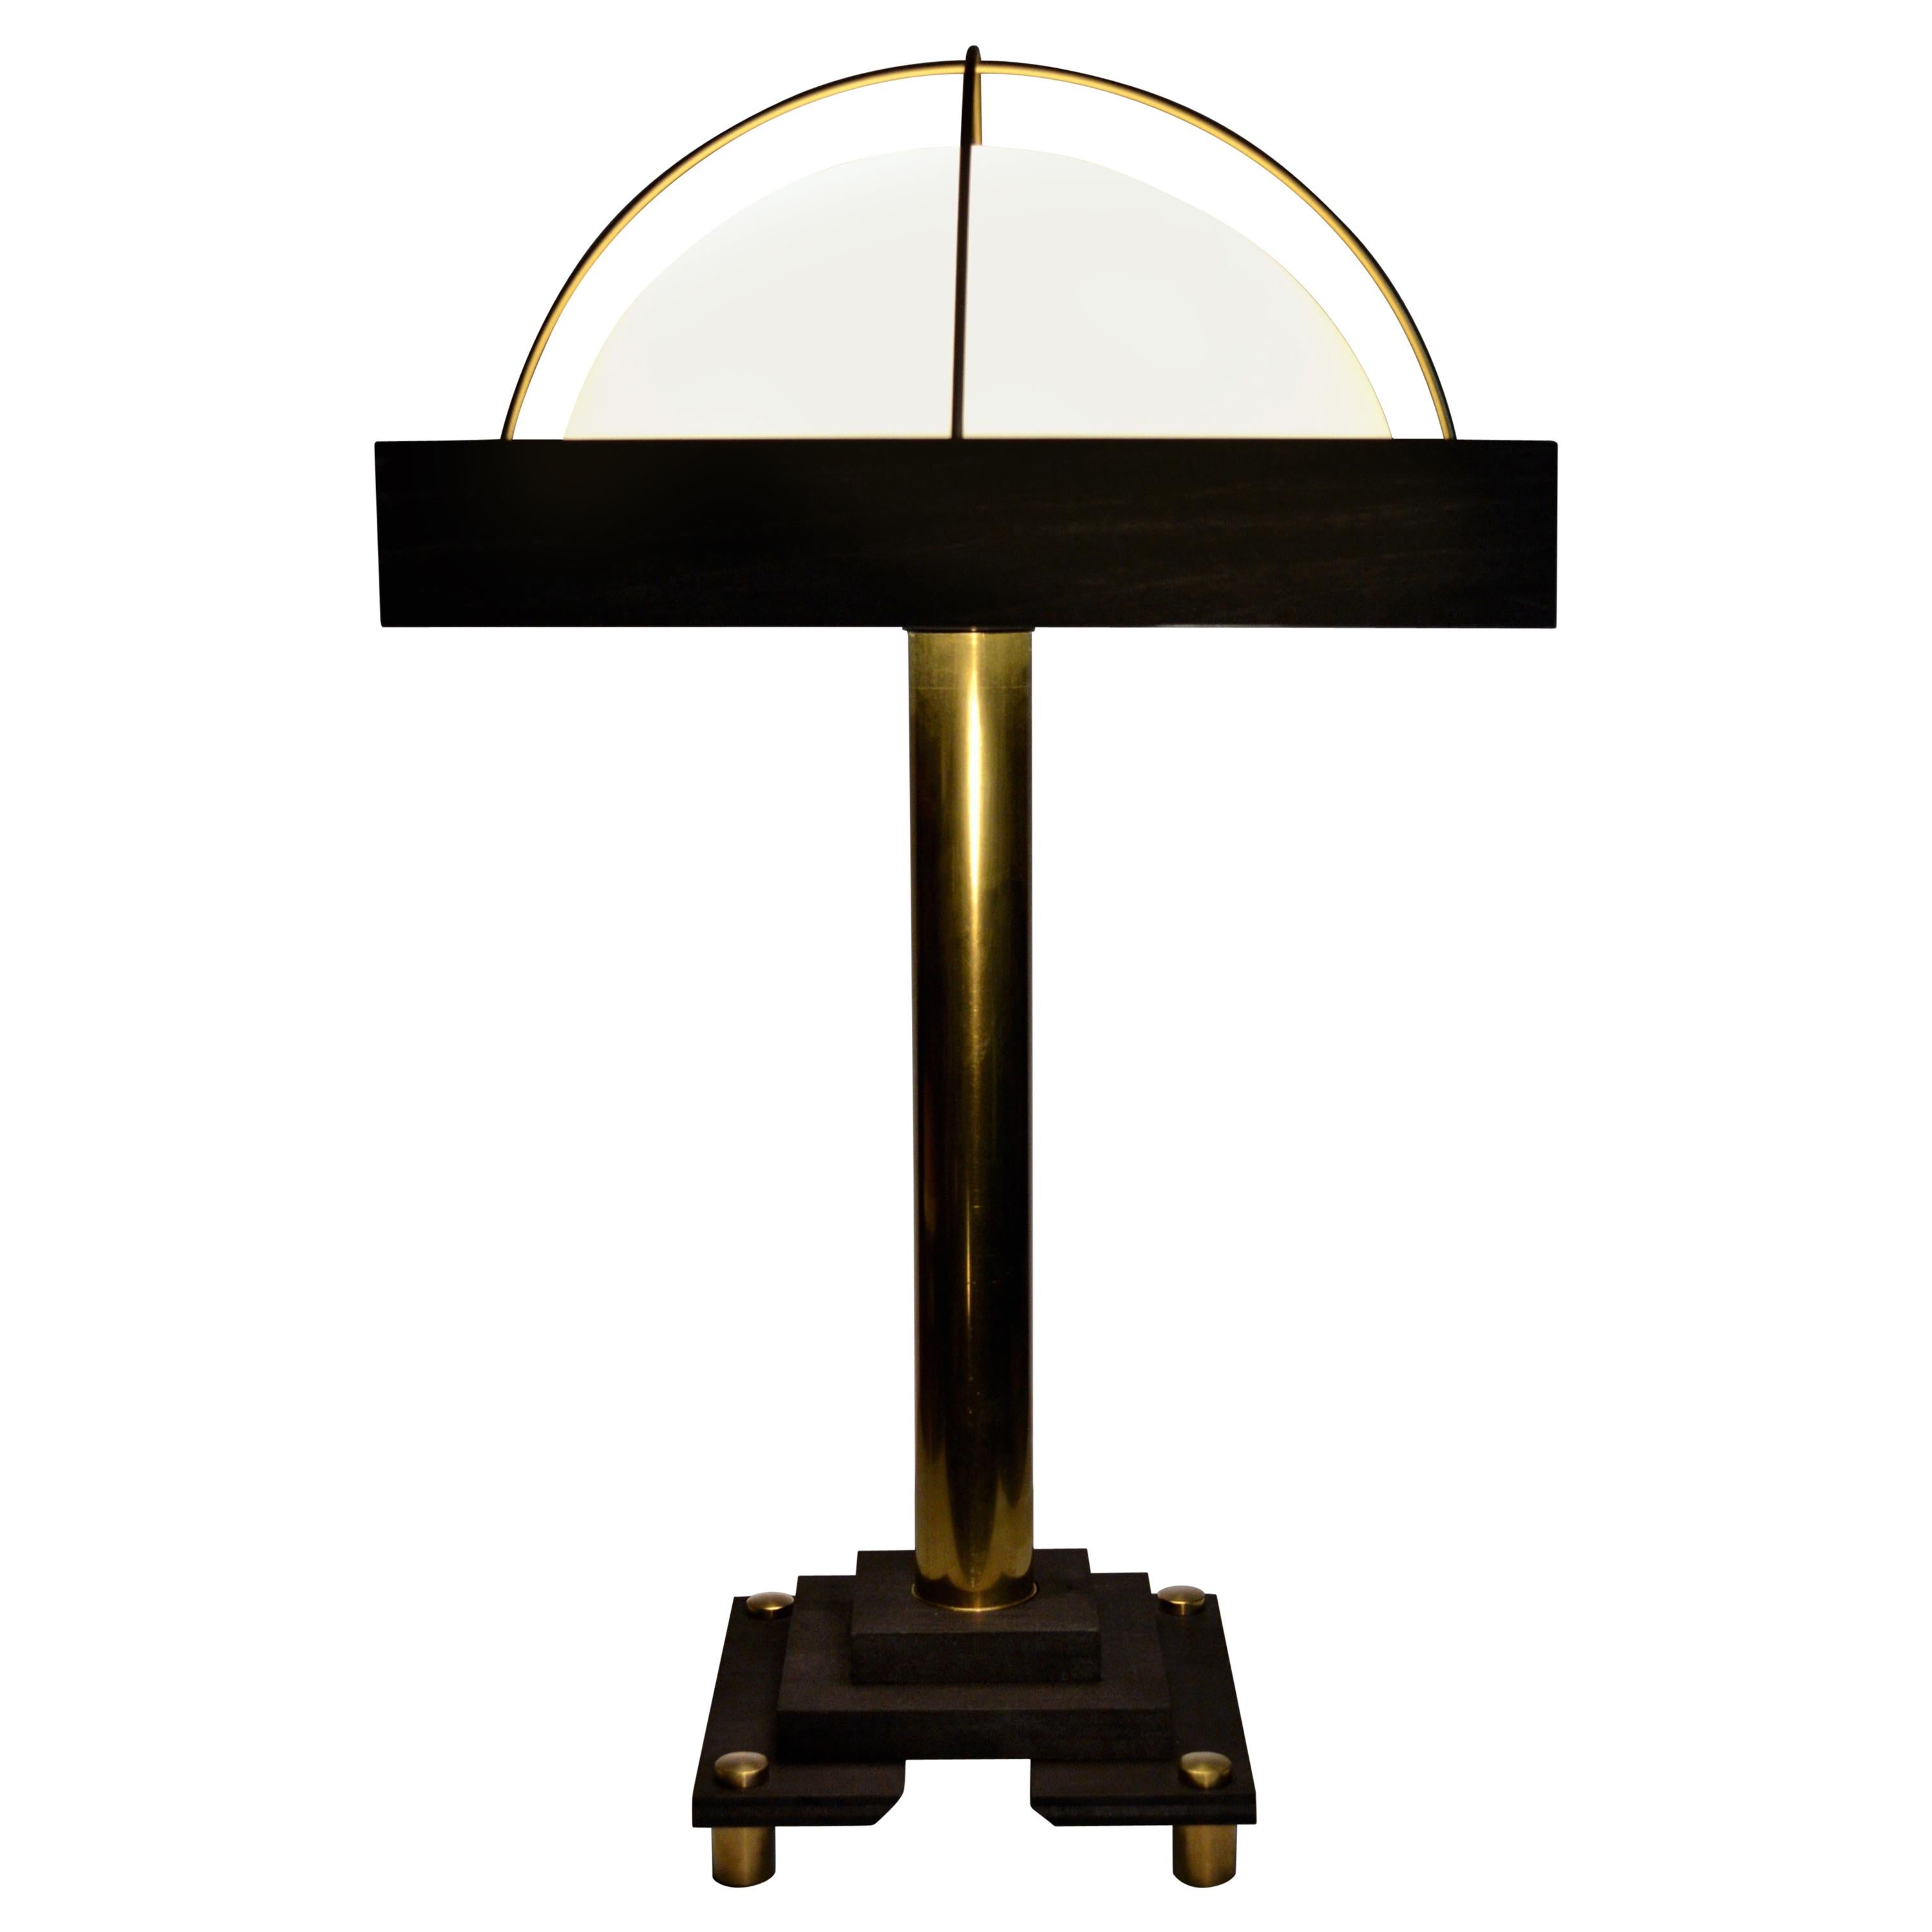 / ART DONOVAN / "Salon" Table Lamp. Bauhaus, Contemporary Handmade Design. For Sale